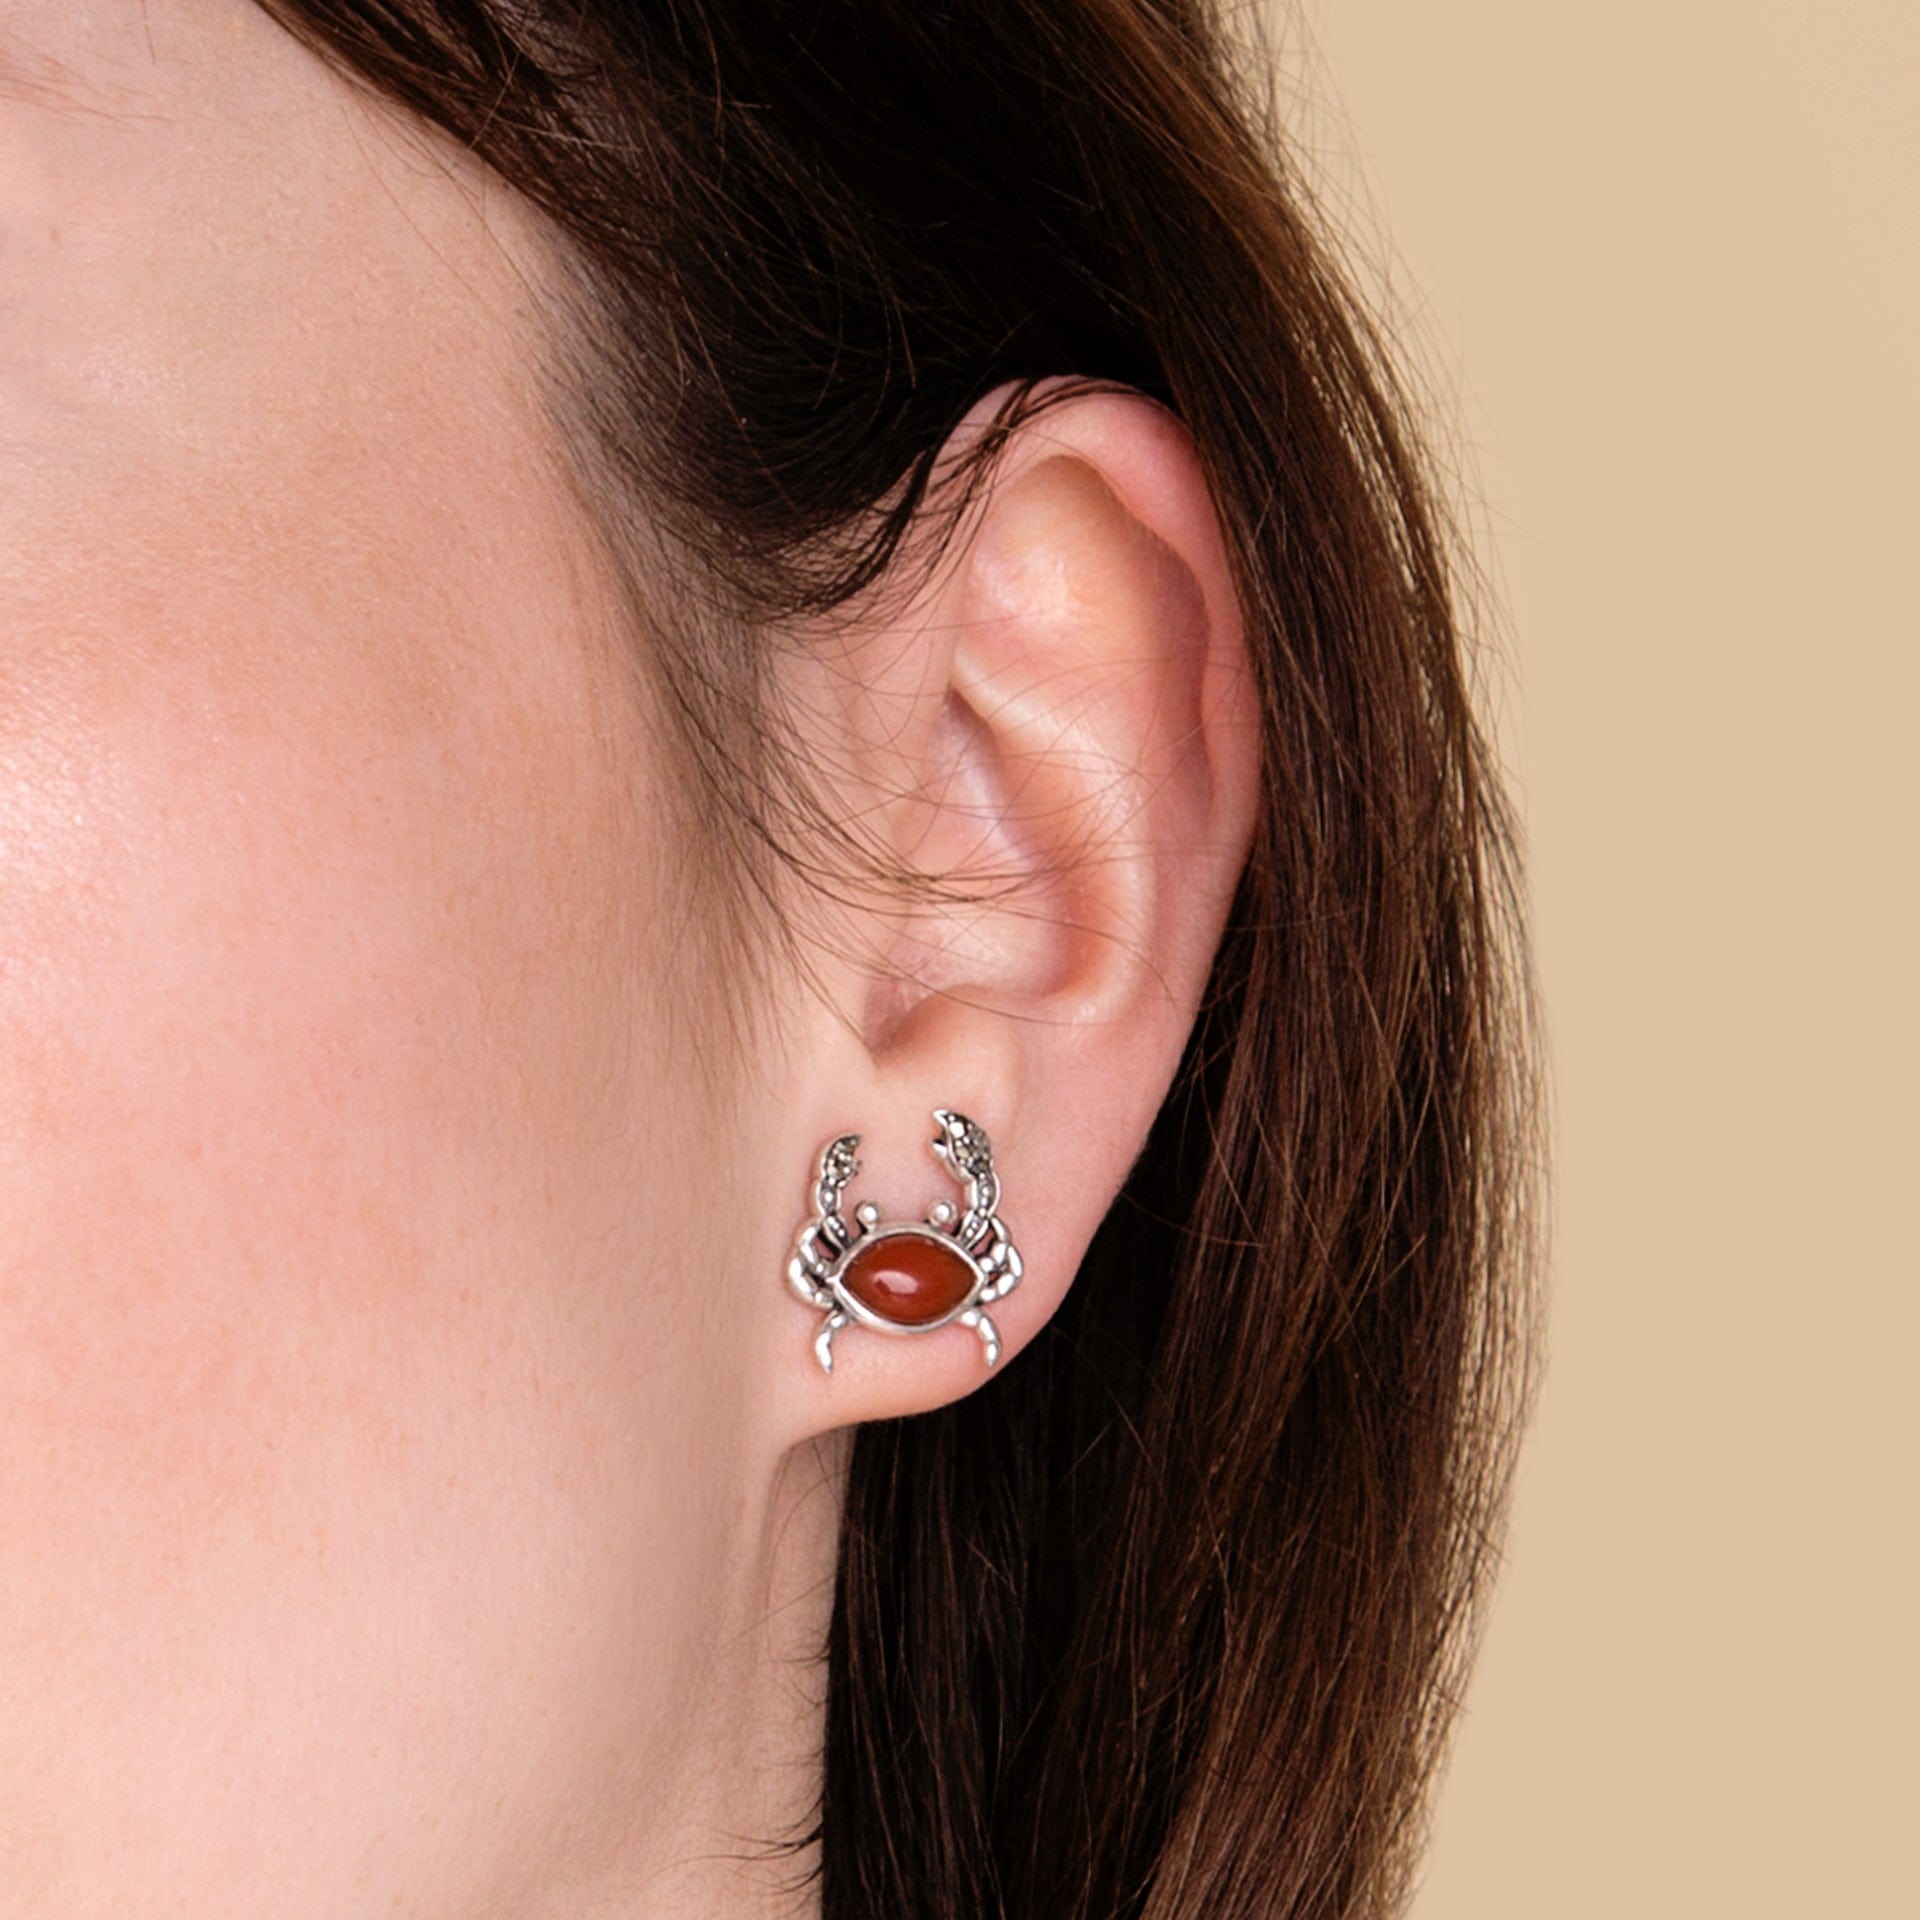 Red Dyed Carnelian & Marcasite Crab Stud Earrings In 925 Sterling Silver - Gemondo